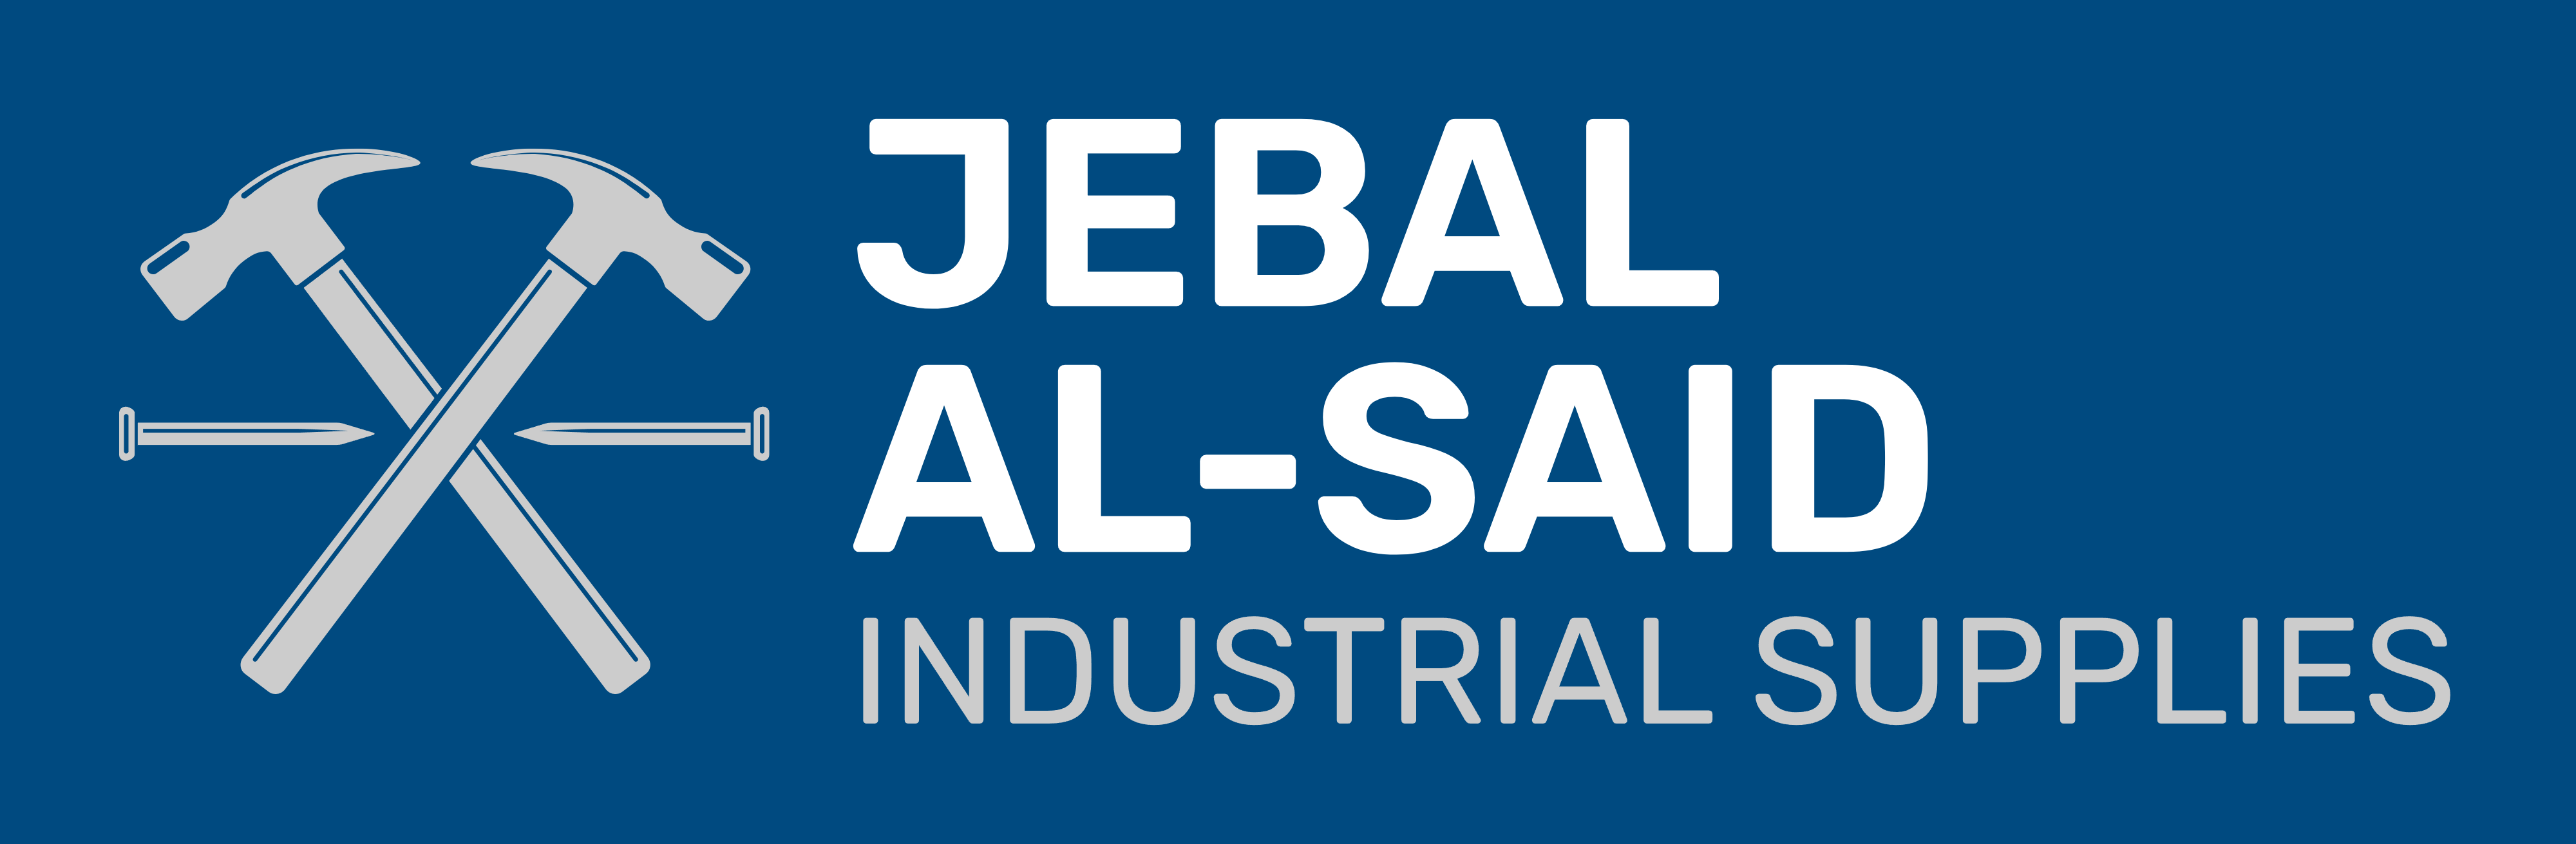 Jebal Al-said Industrial Supplies